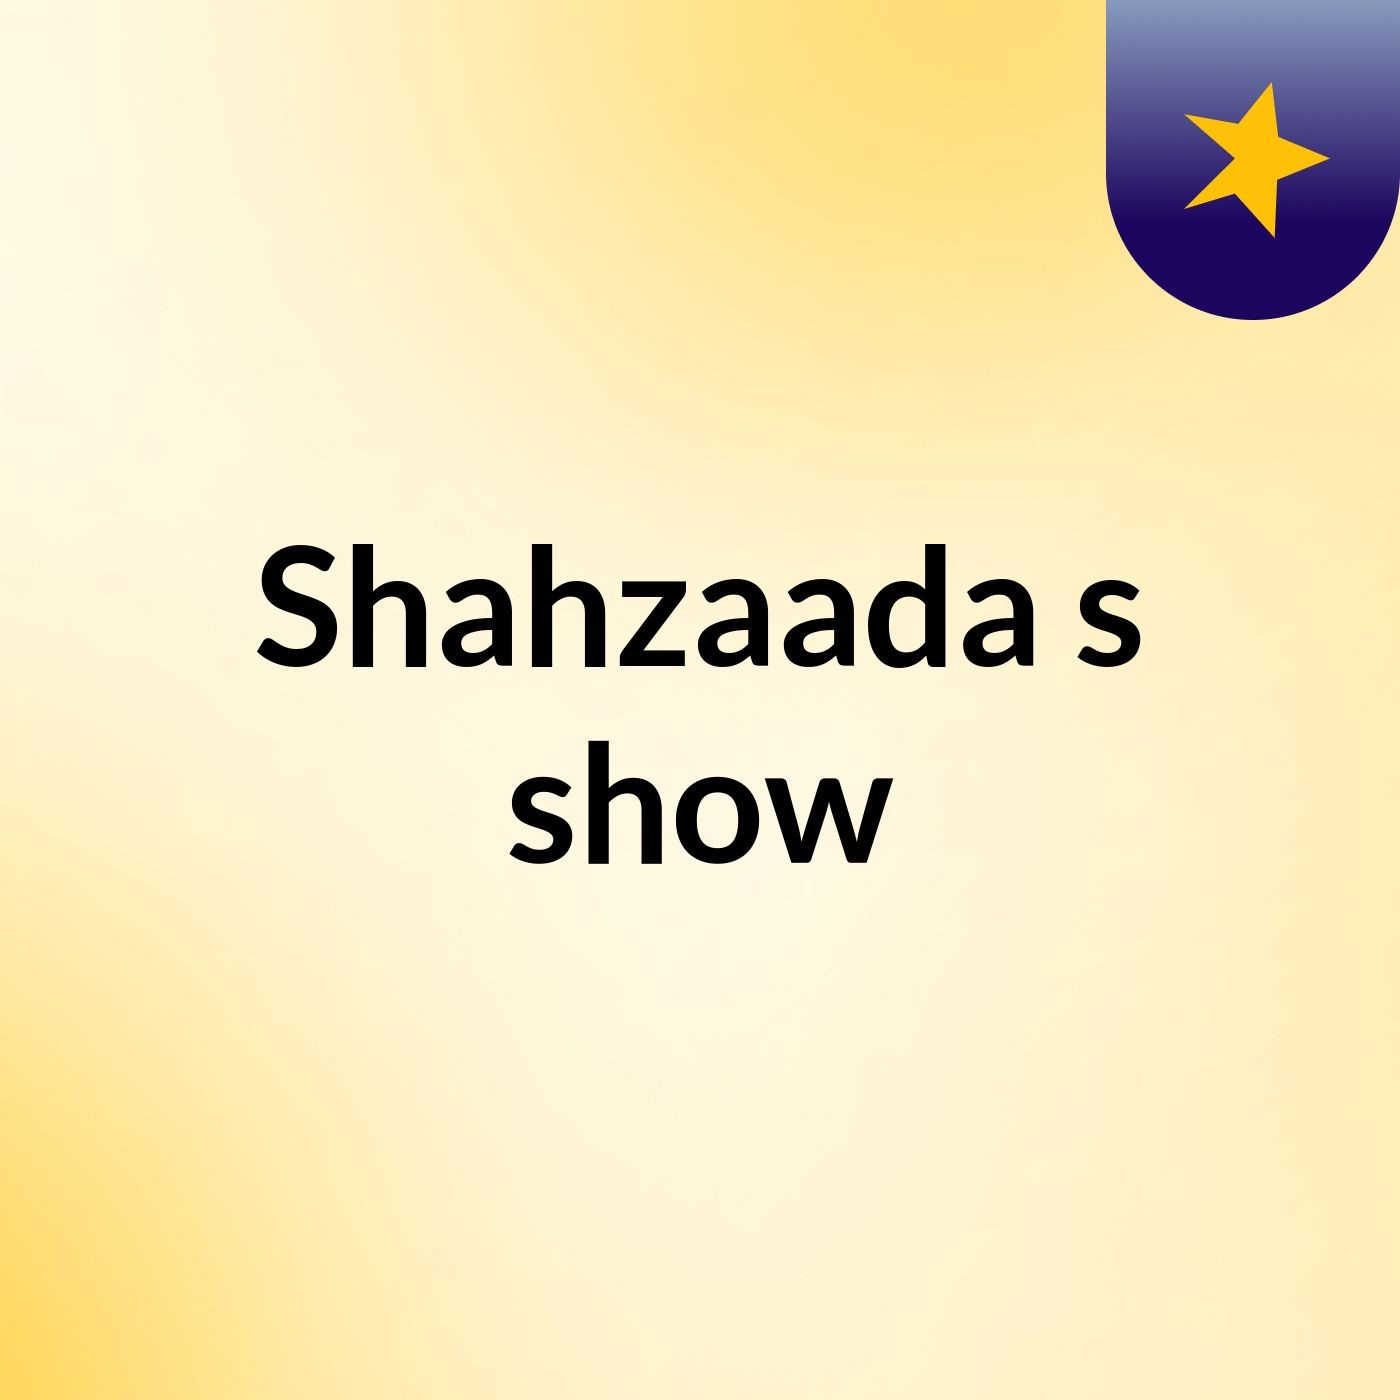 Shahzaada's show